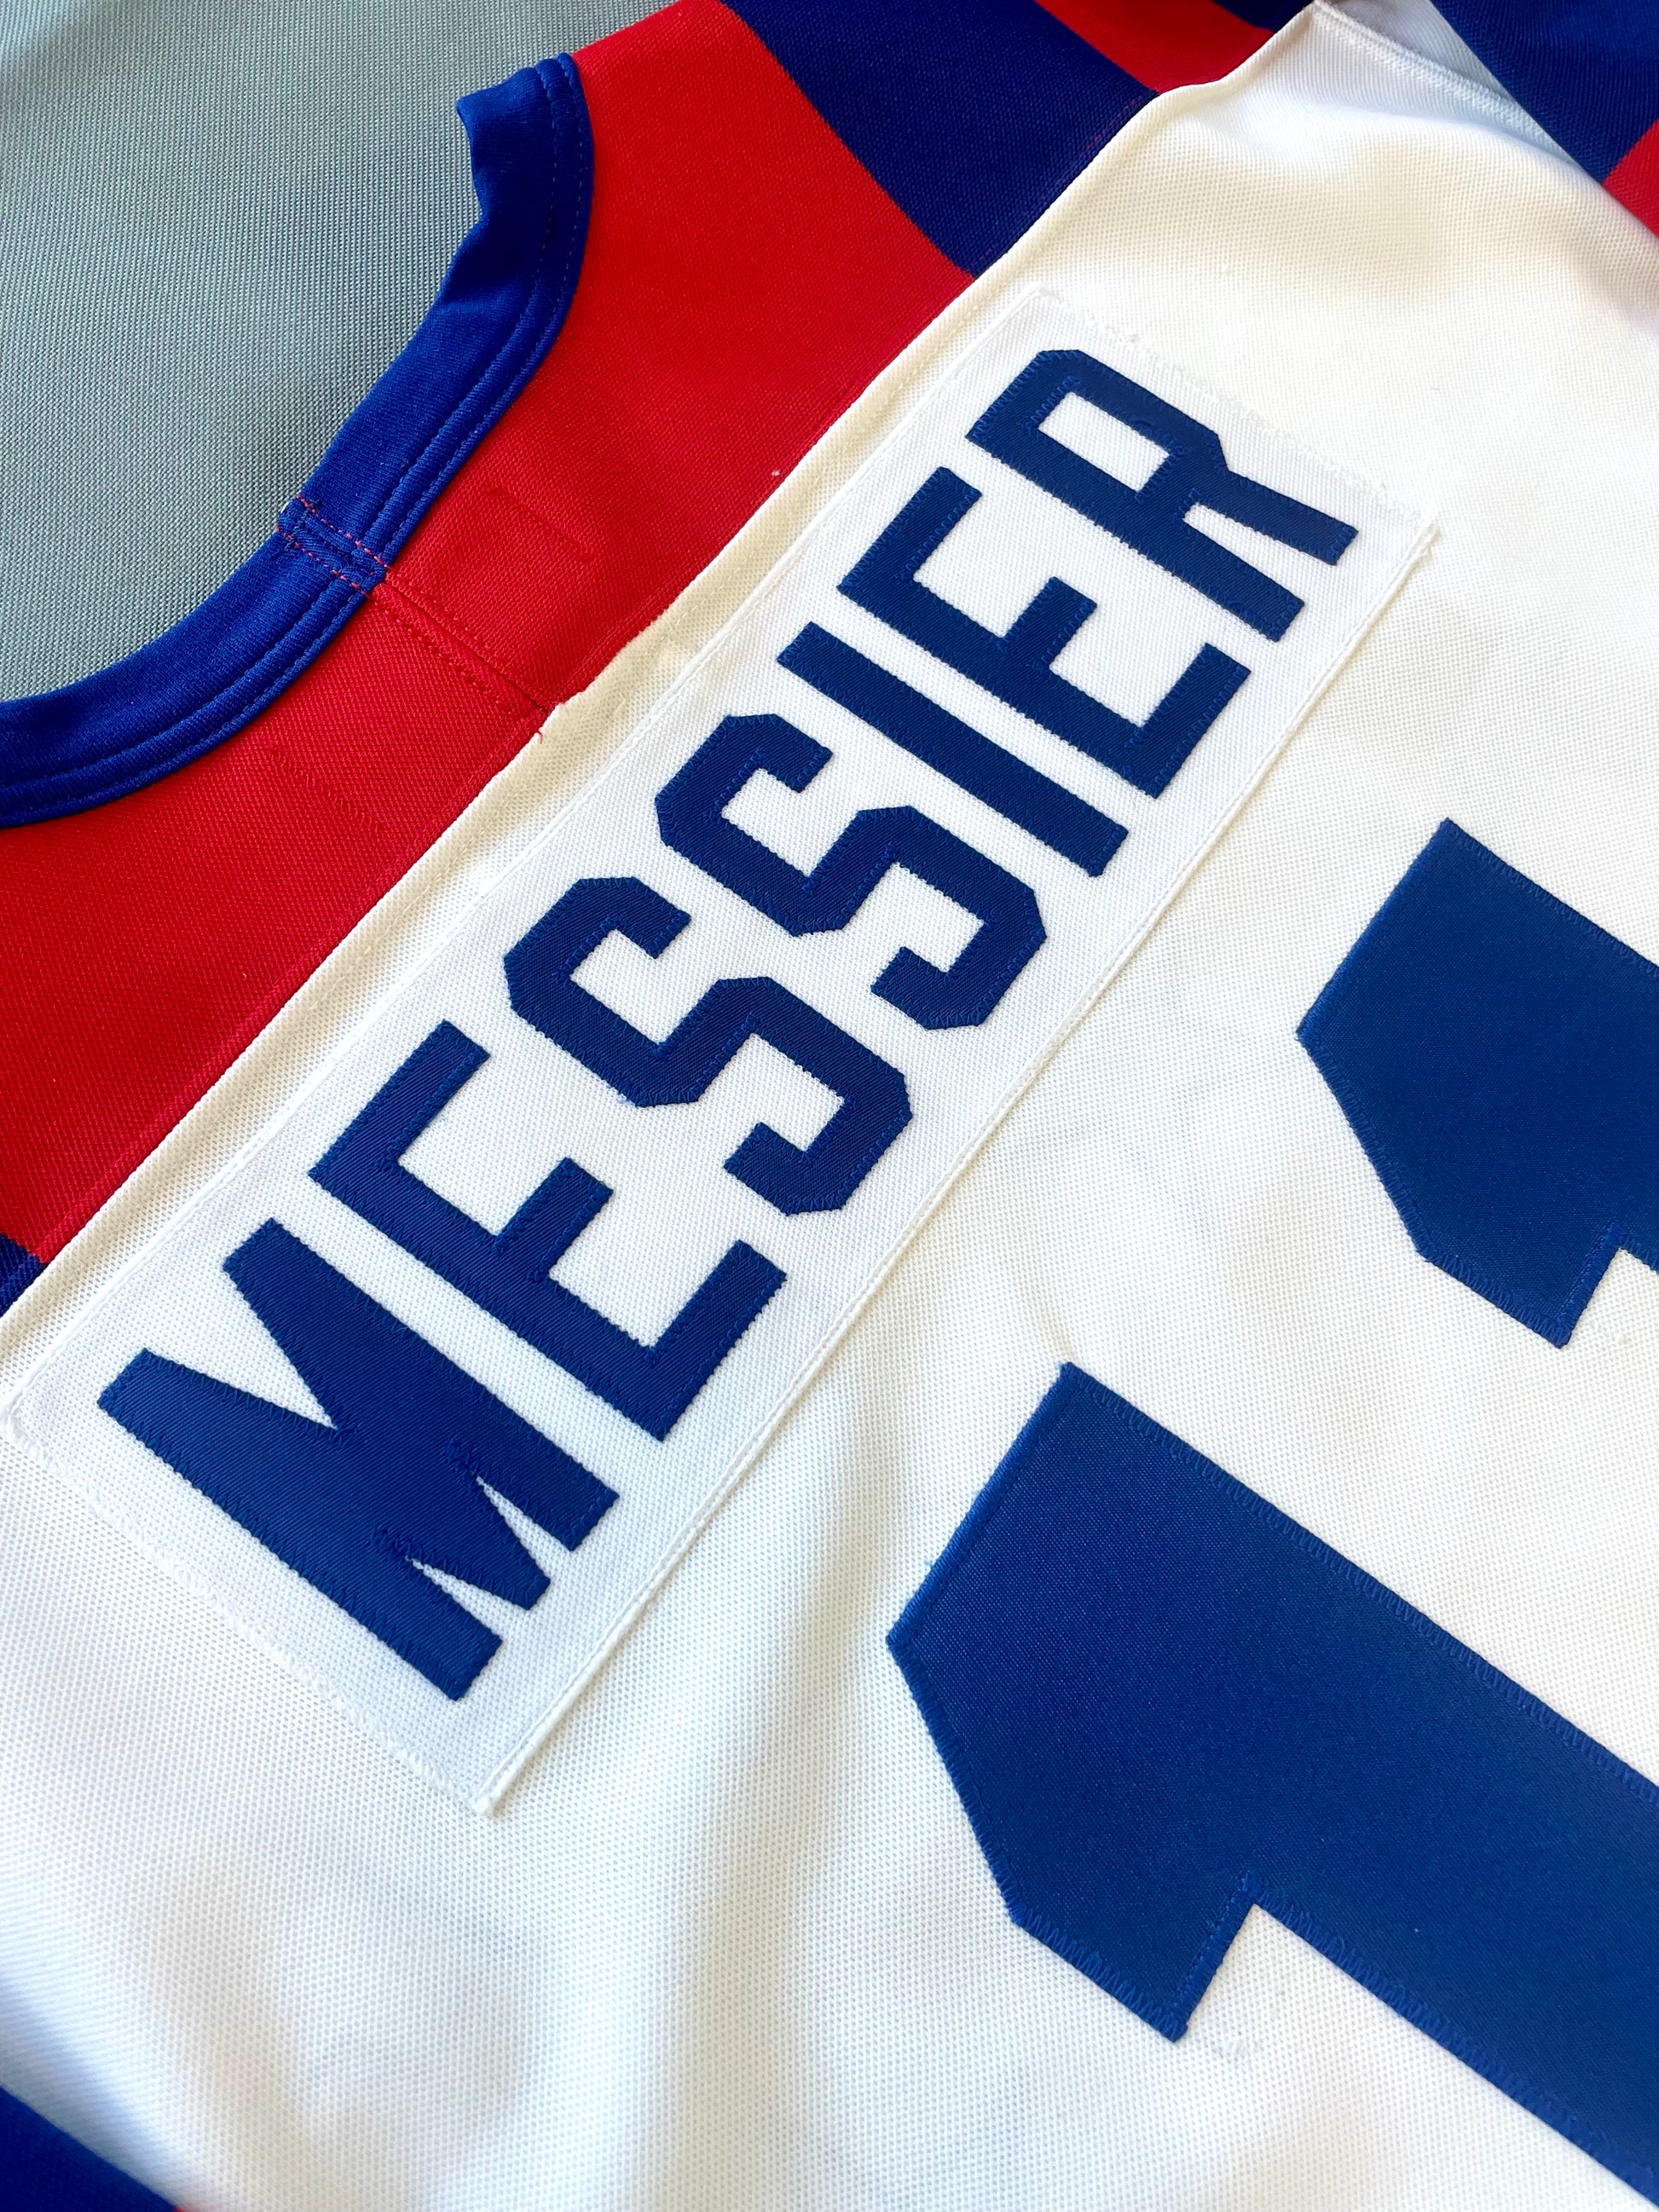 CCM Mark Messier NHL Fan Shop